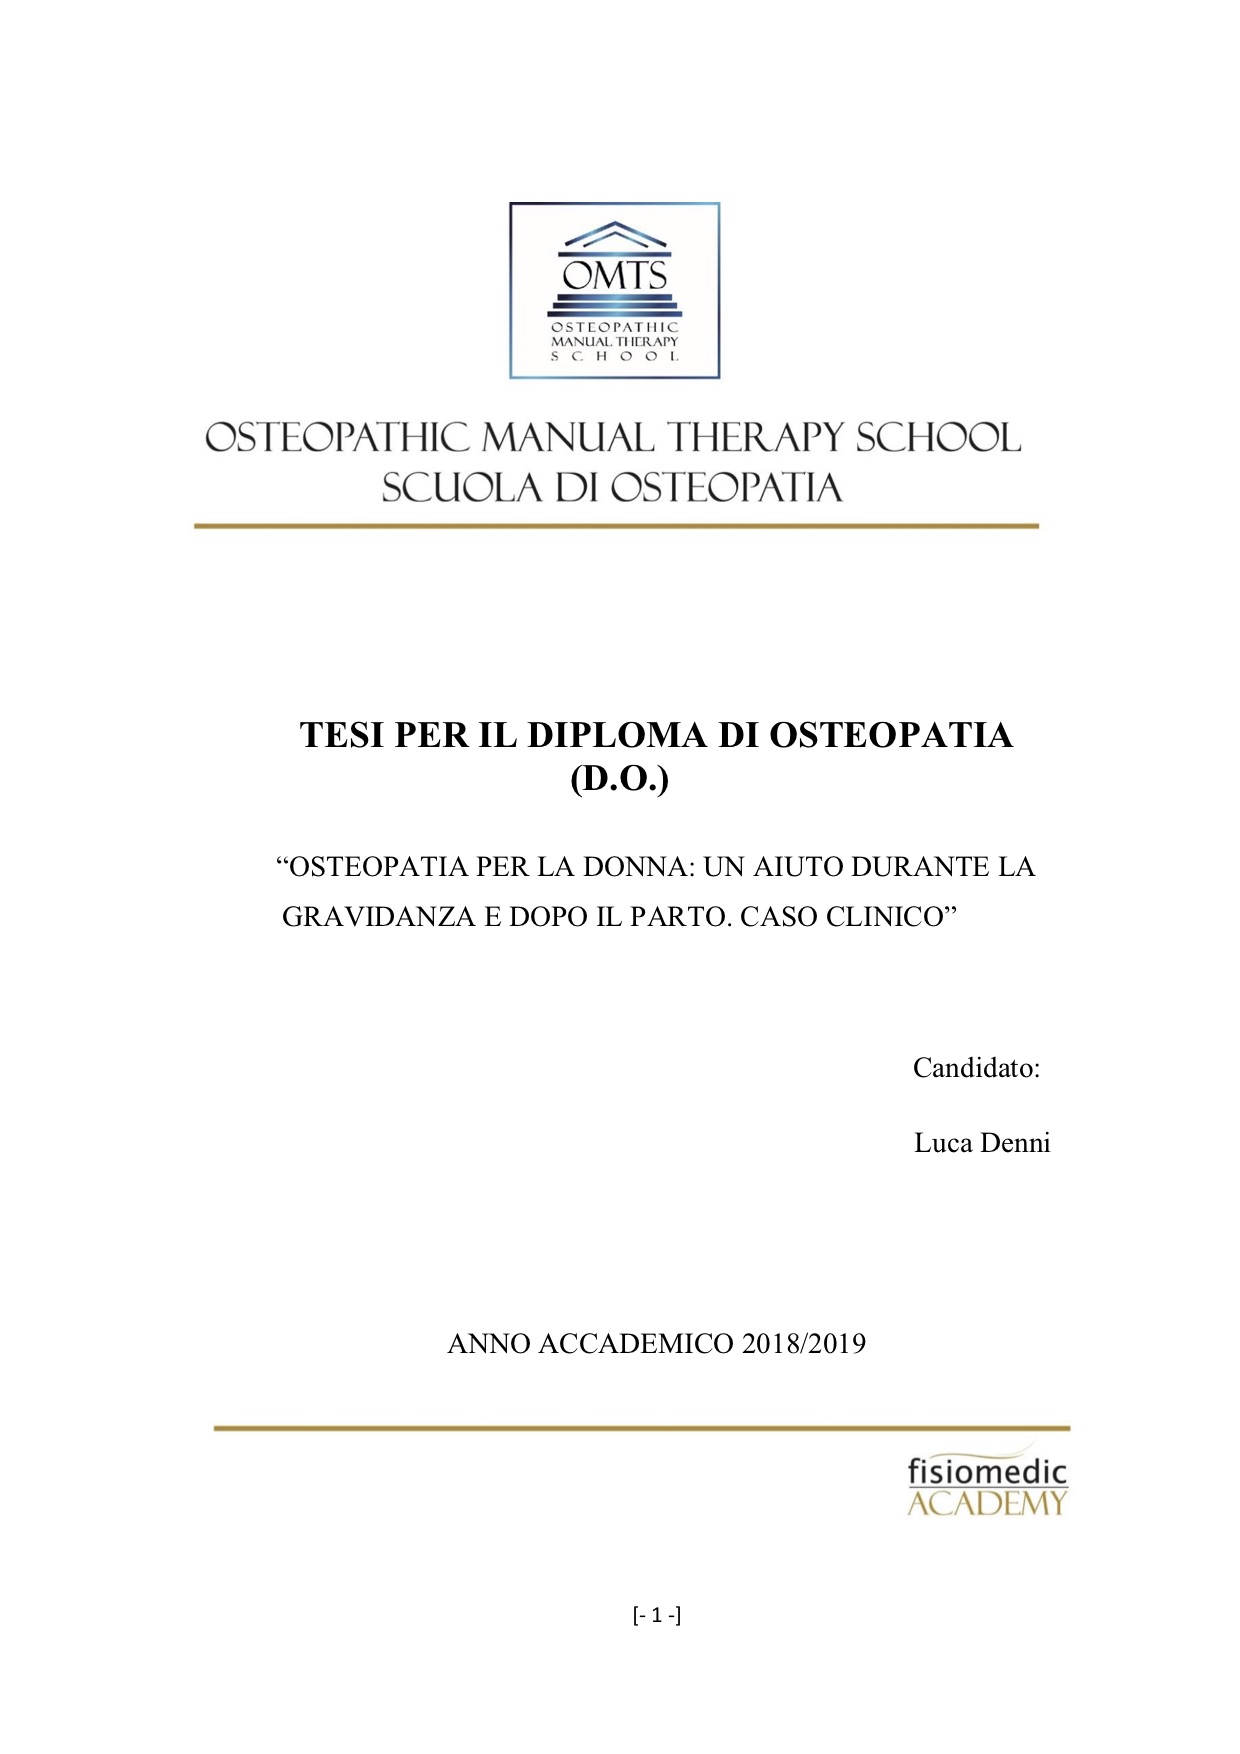 Luca Denni Tesi Diploma Osteopatia 2019